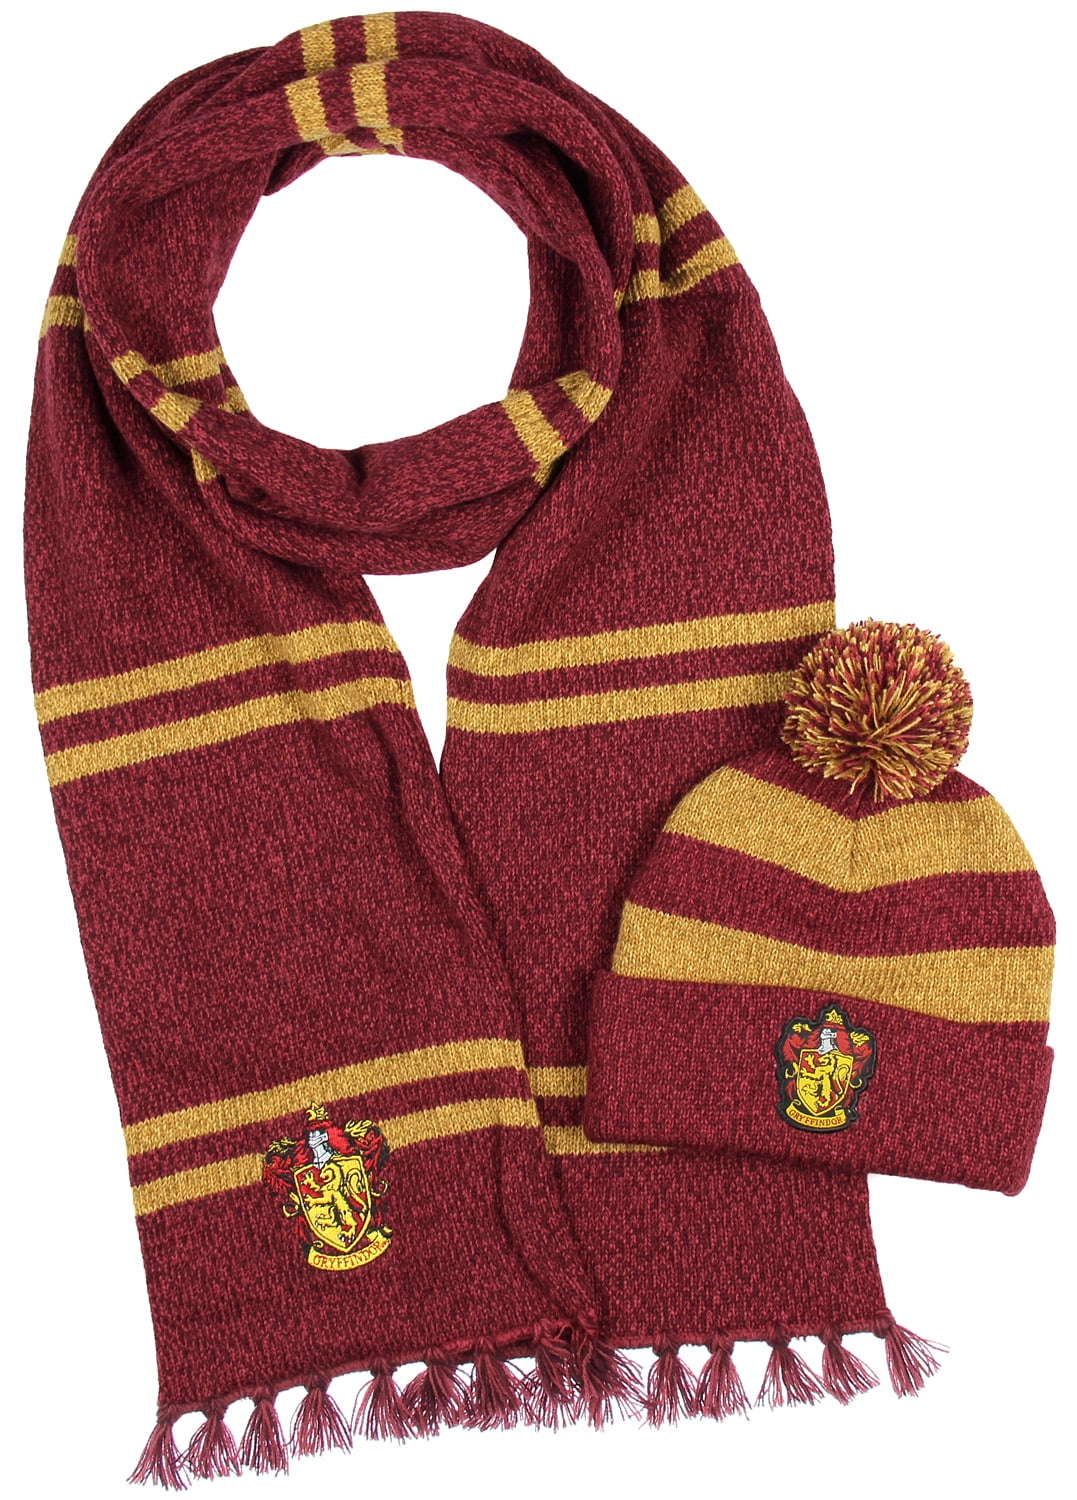 Beanie Soft Warm Costume Xmas Gift 2pcs Harry Potter Gryffindor House Scarf 